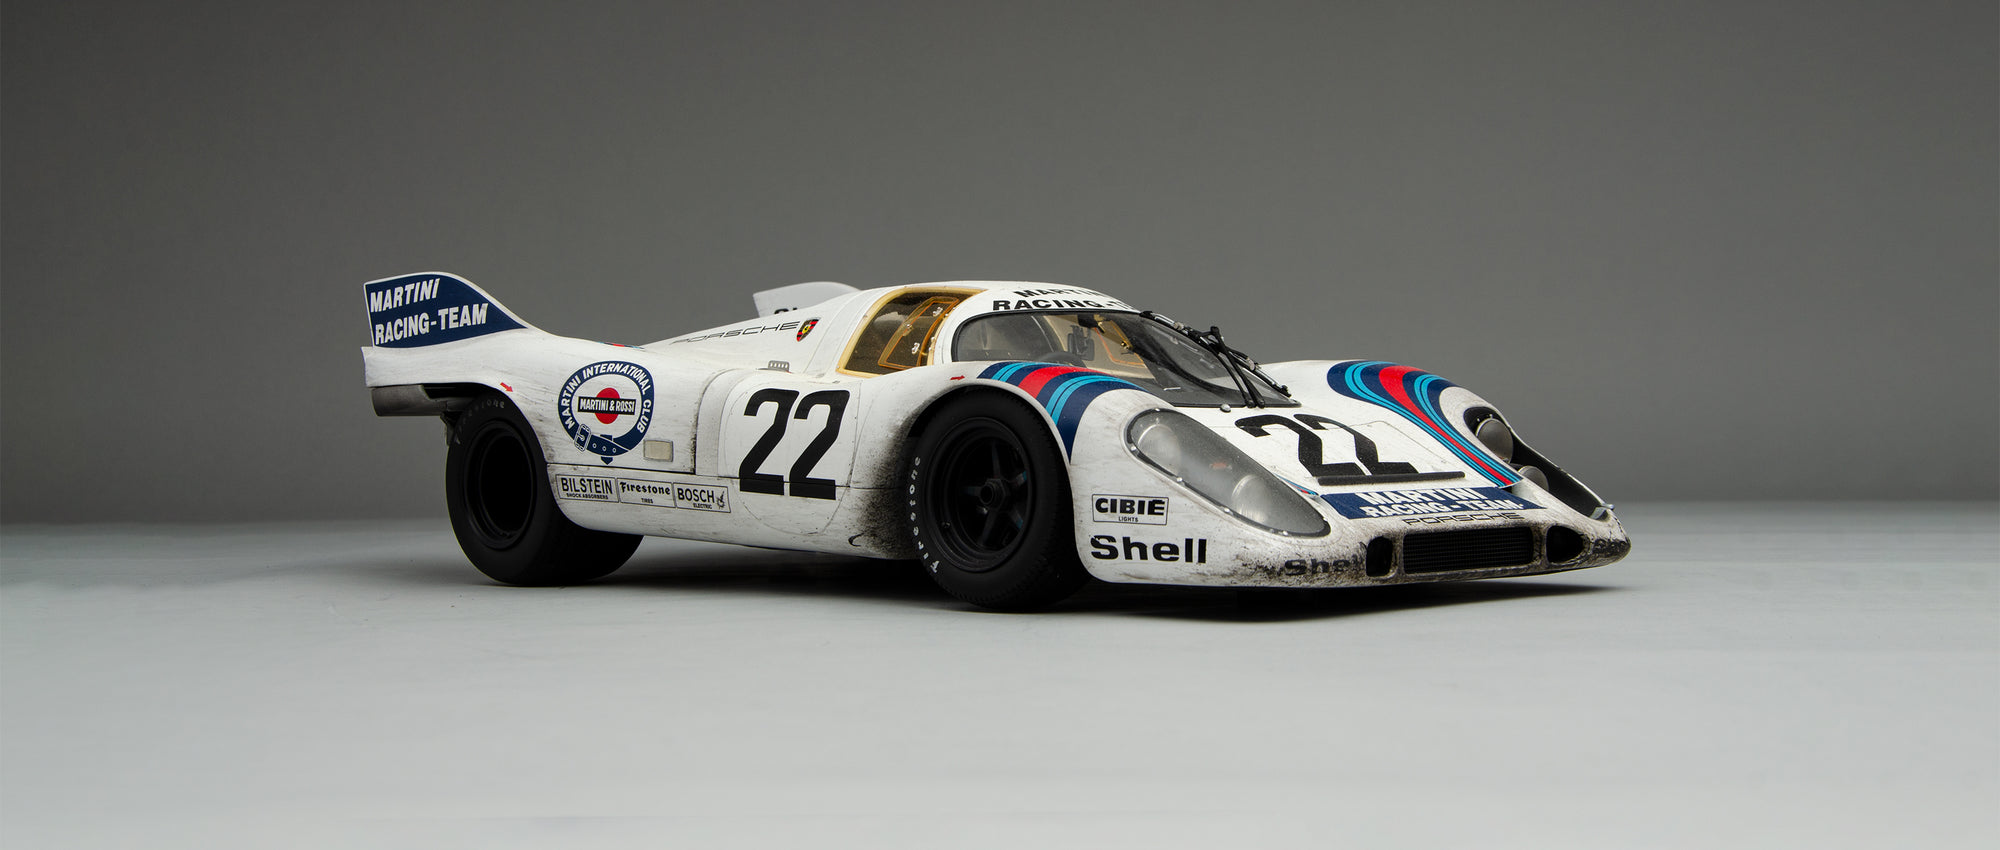 Porsche 917K - Le Mans-Sieger 1971 - Martini-Lackierung - Race Weathered